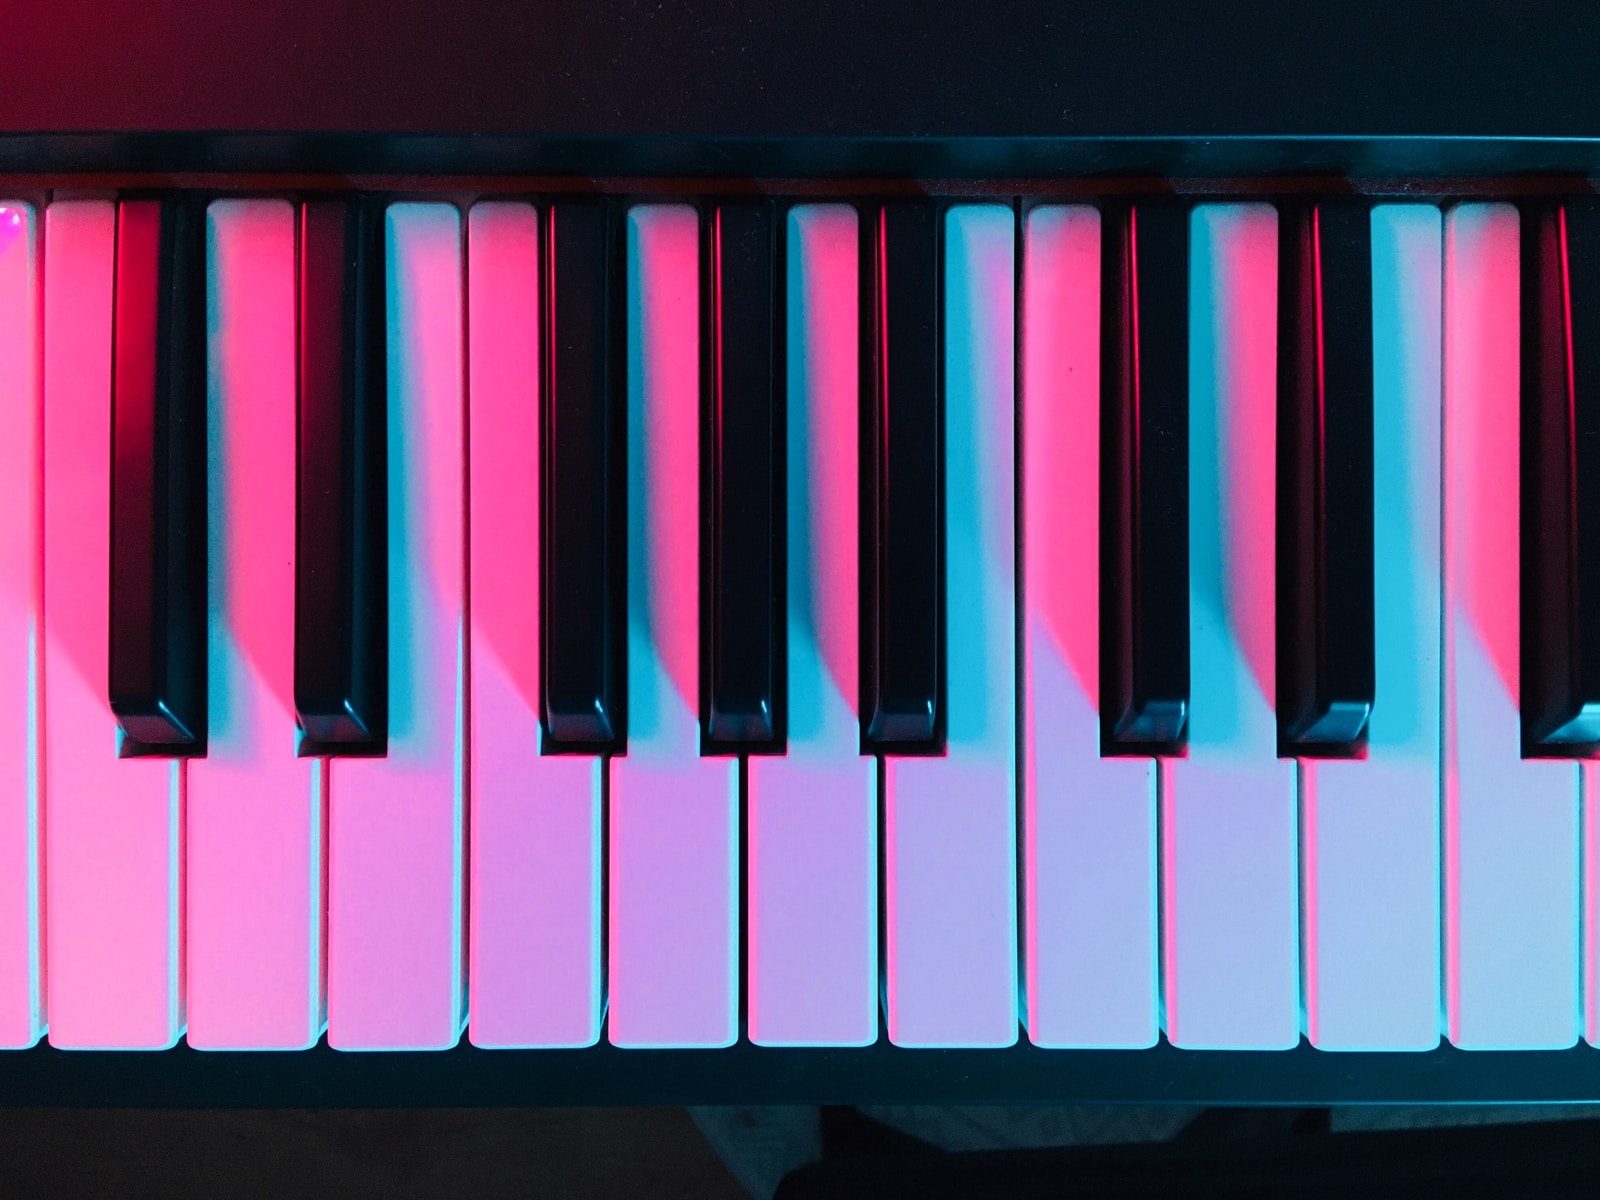 Ableton black and white piano keys